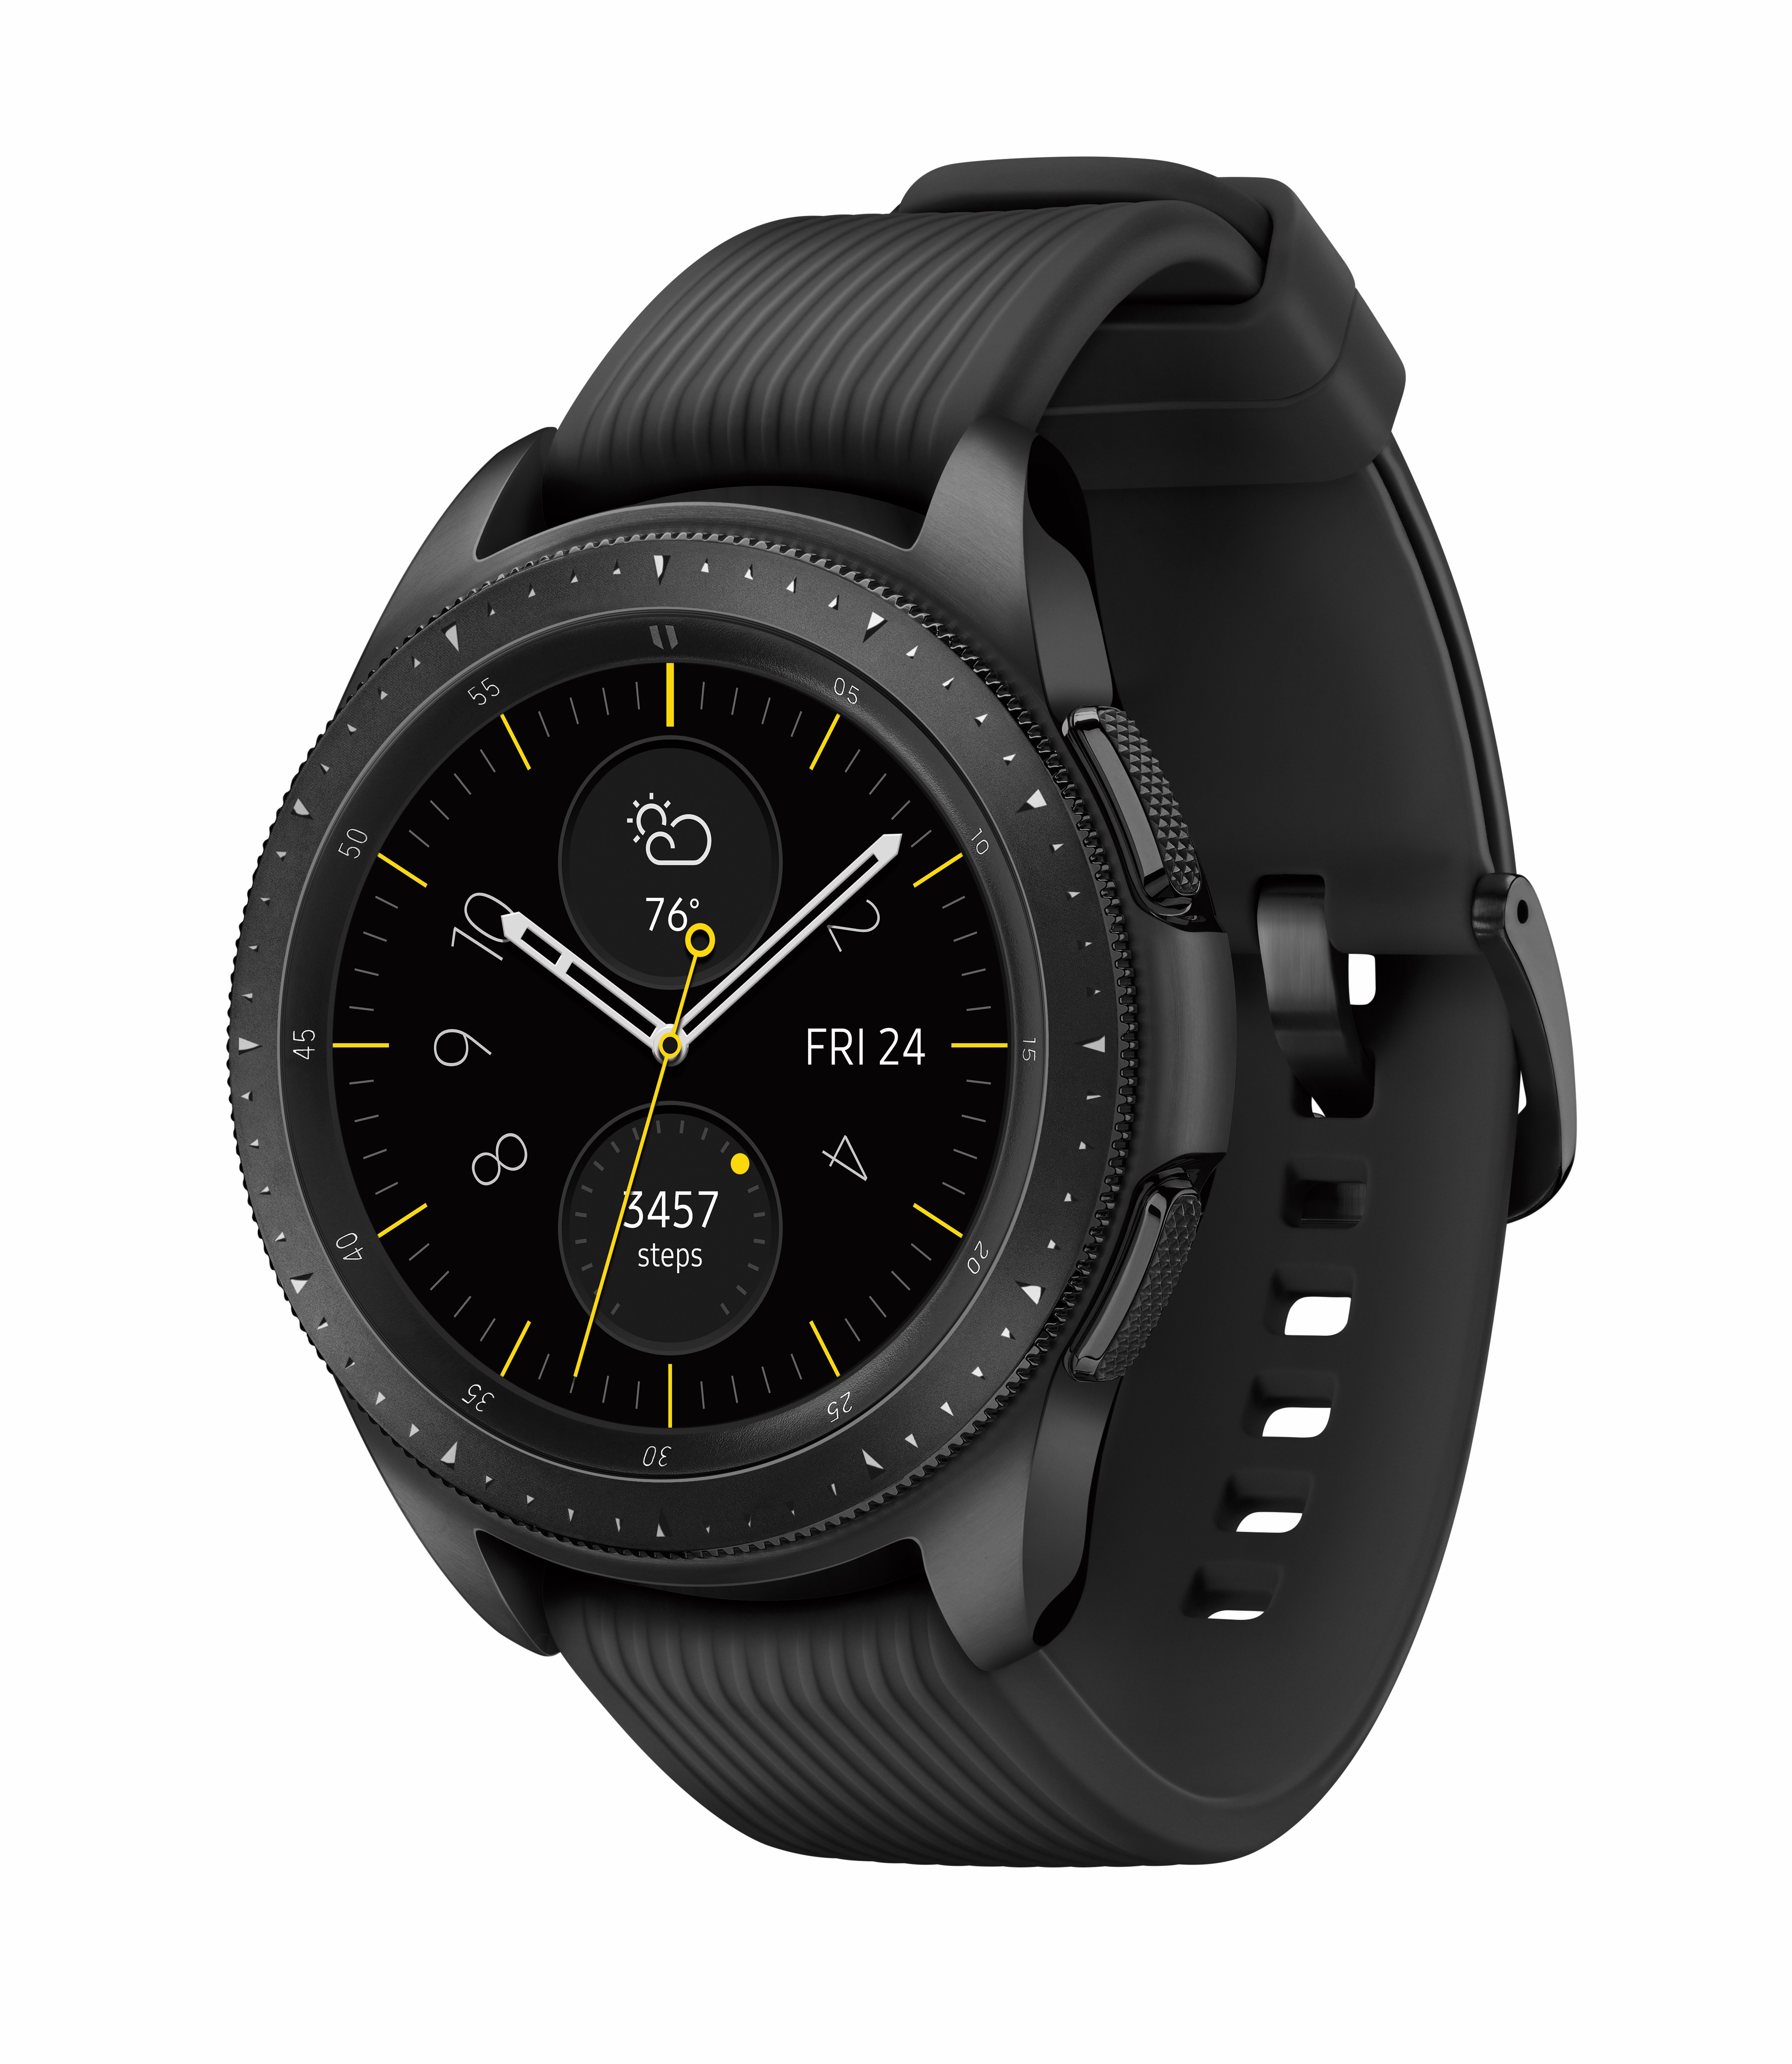 out of 5 stars - Samsung Gear S2 SM-RZKAXAR Smart Watch Dark Gray Wi-Fi BT NFC.out of 5 stars - Samsung Galaxy Watch (42mm) Midnight Black (Bluetooth) SM-RNZKAXAR.Samsung Gear S2 SM-RZKAXAR Smart Watch Dark Gray Wi-Fi BT NFC.$